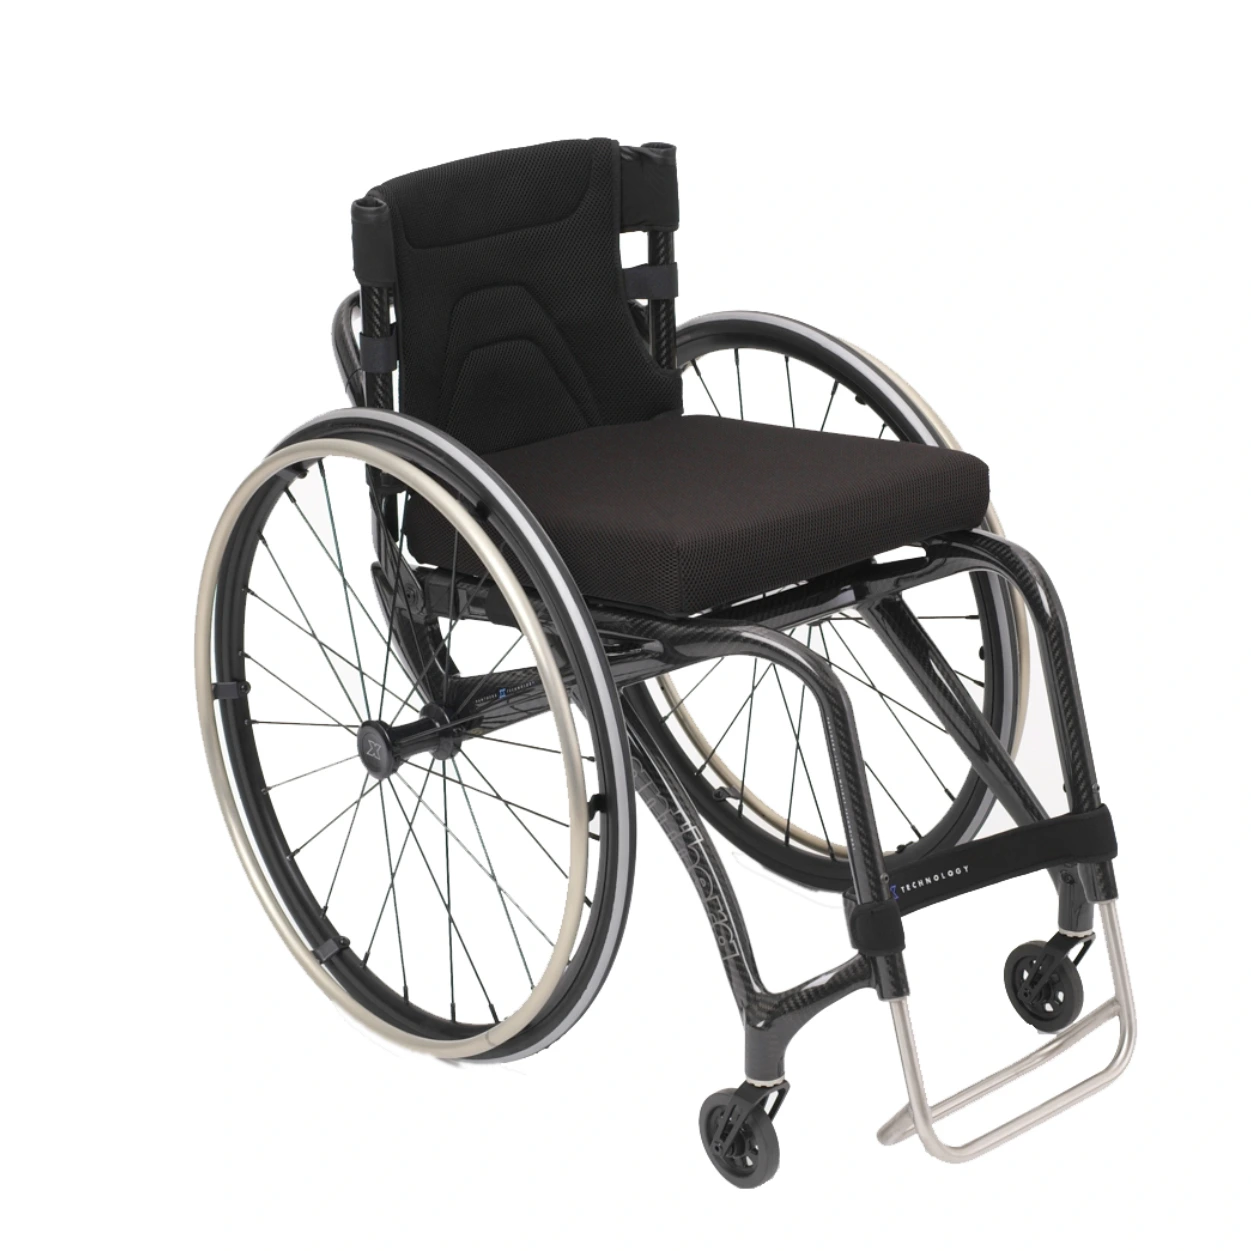 Ultralight Panthera X active manual wheelchair. Studio photo with empty seat